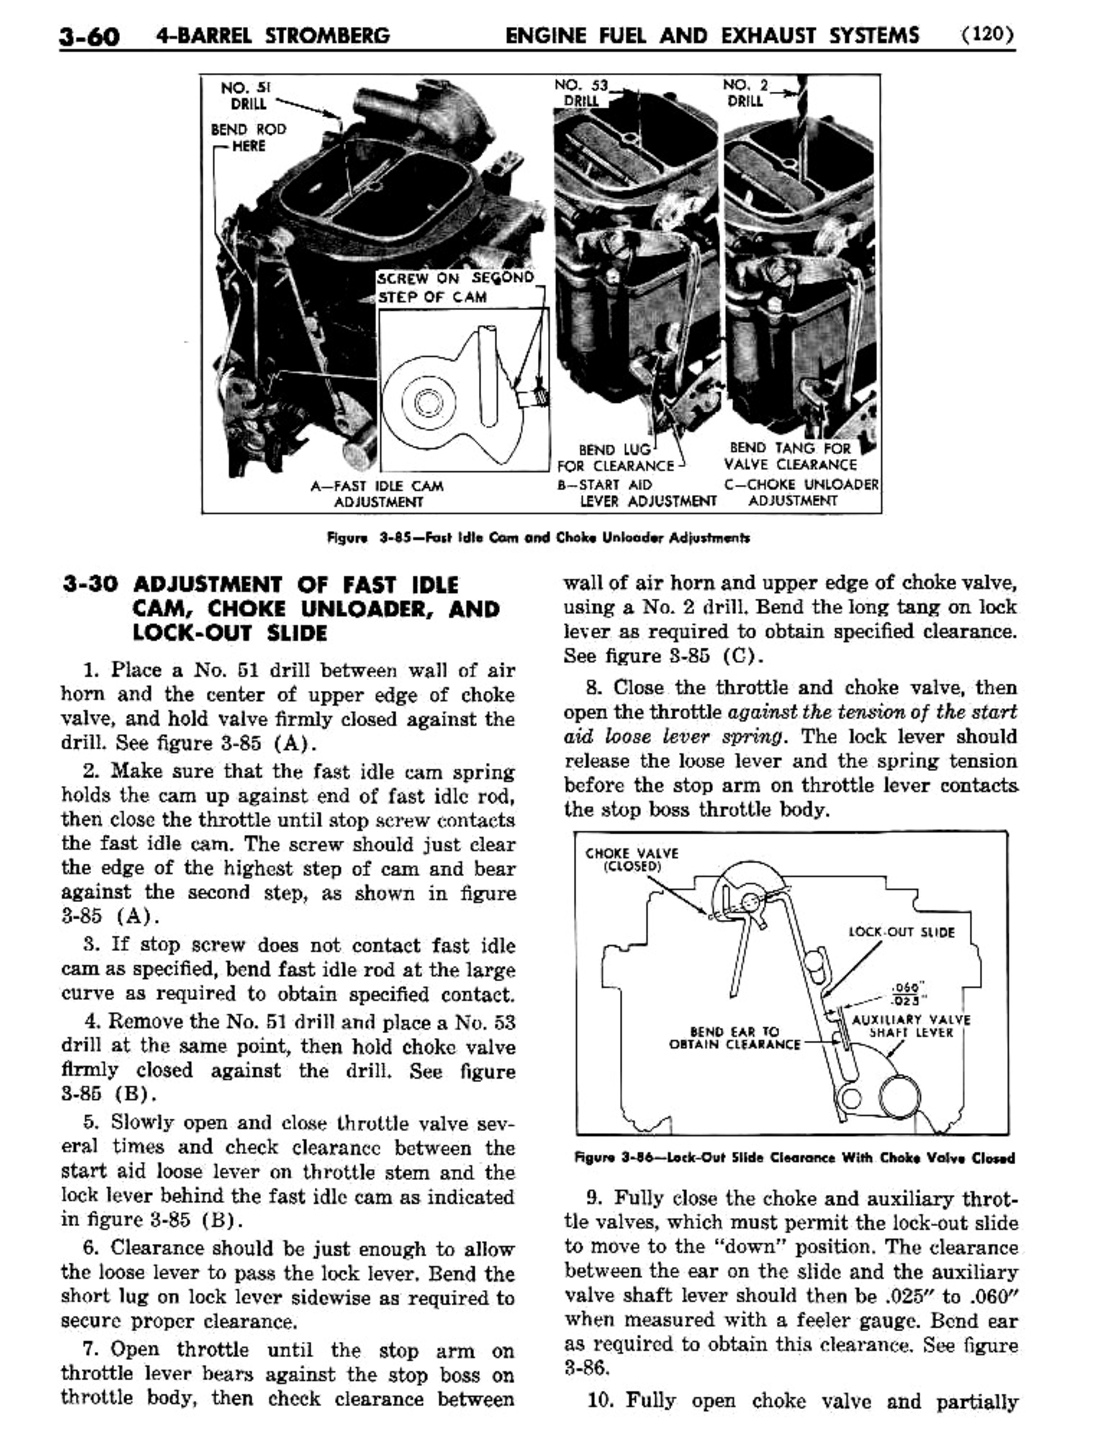 n_04 1954 Buick Shop Manual - Engine Fuel & Exhaust-060-060.jpg